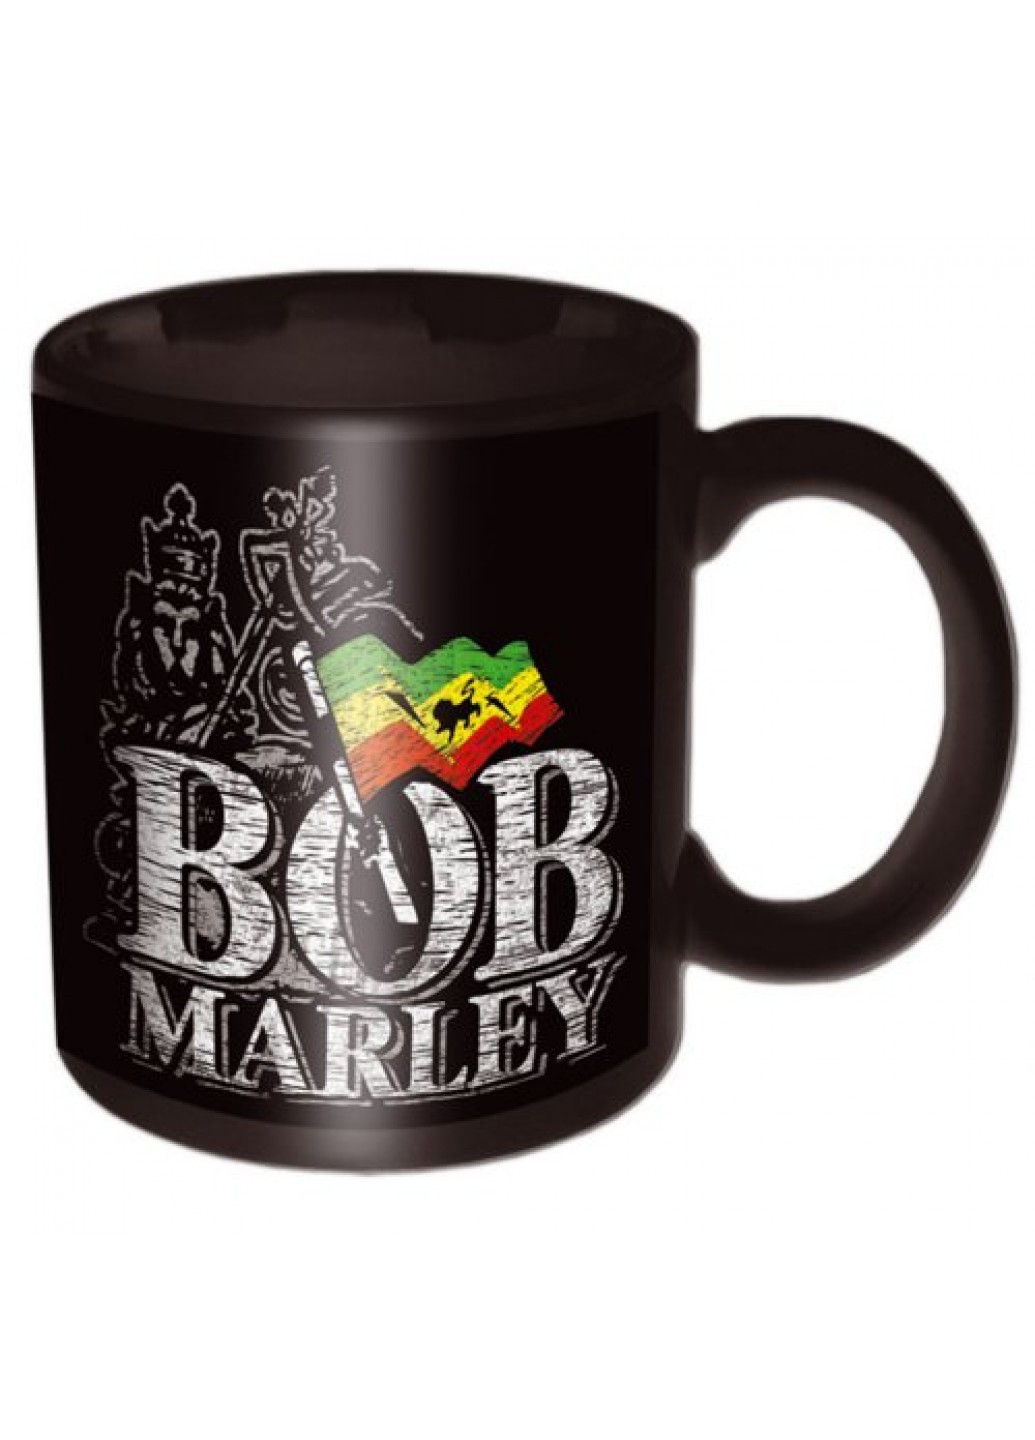 Кружка "Bob Marley" Rock Off (210766827)